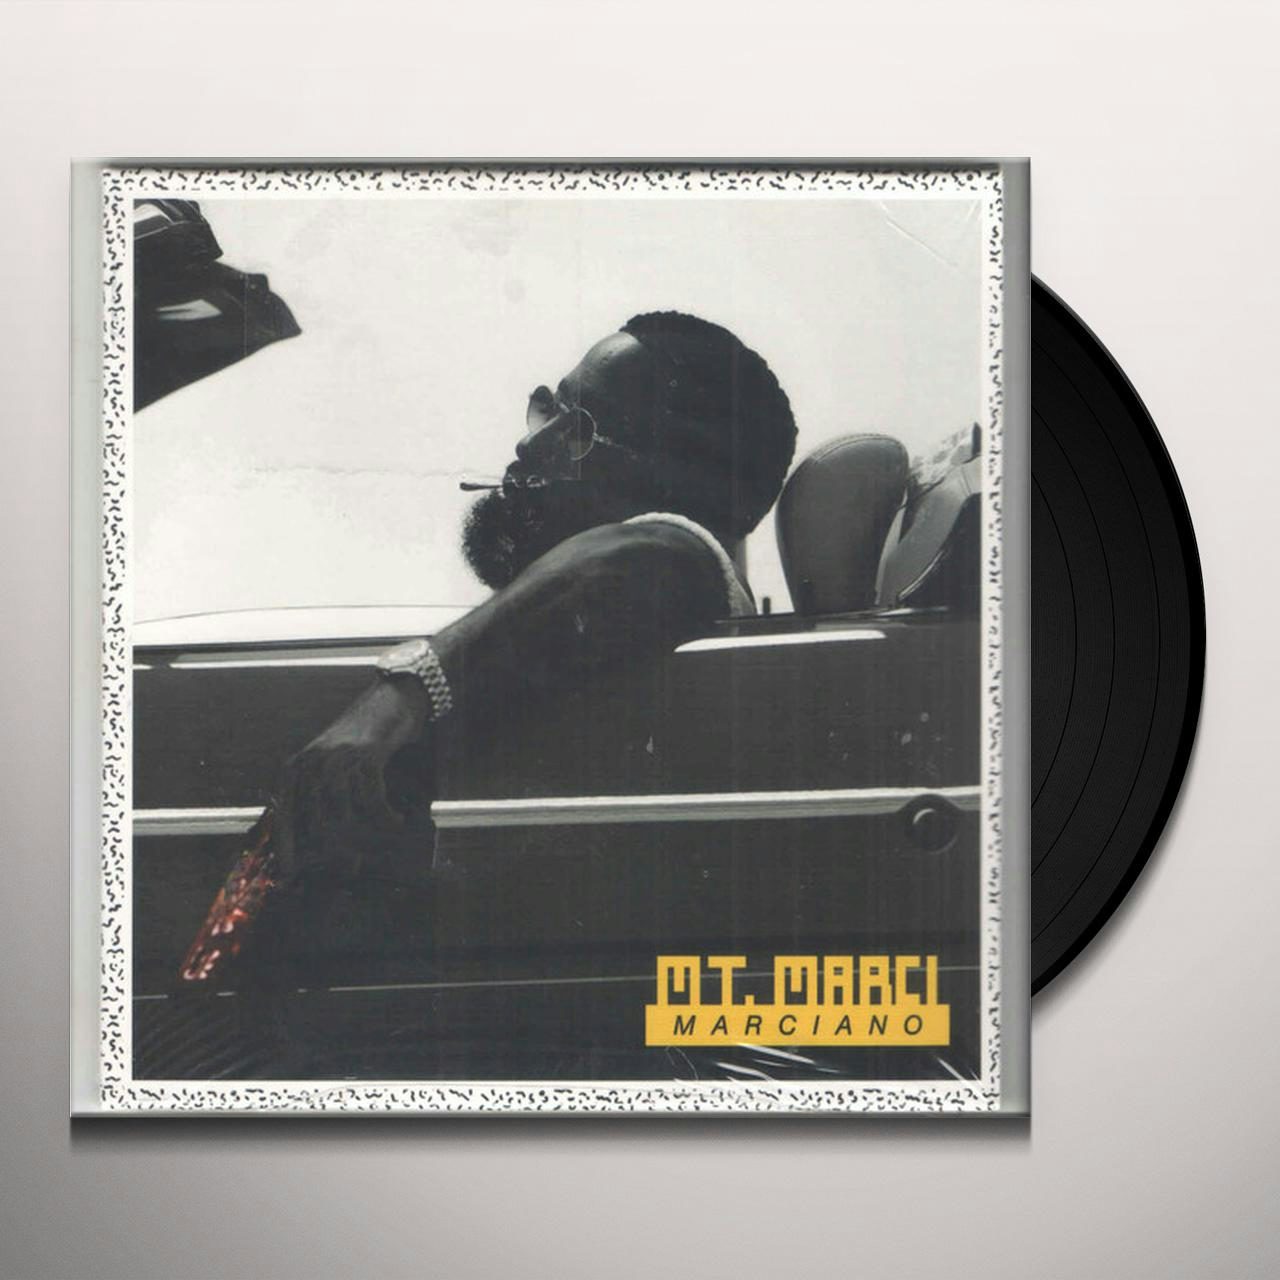 THE BITTER DOSE (2LP) Vinyl Record - Roc Marciano